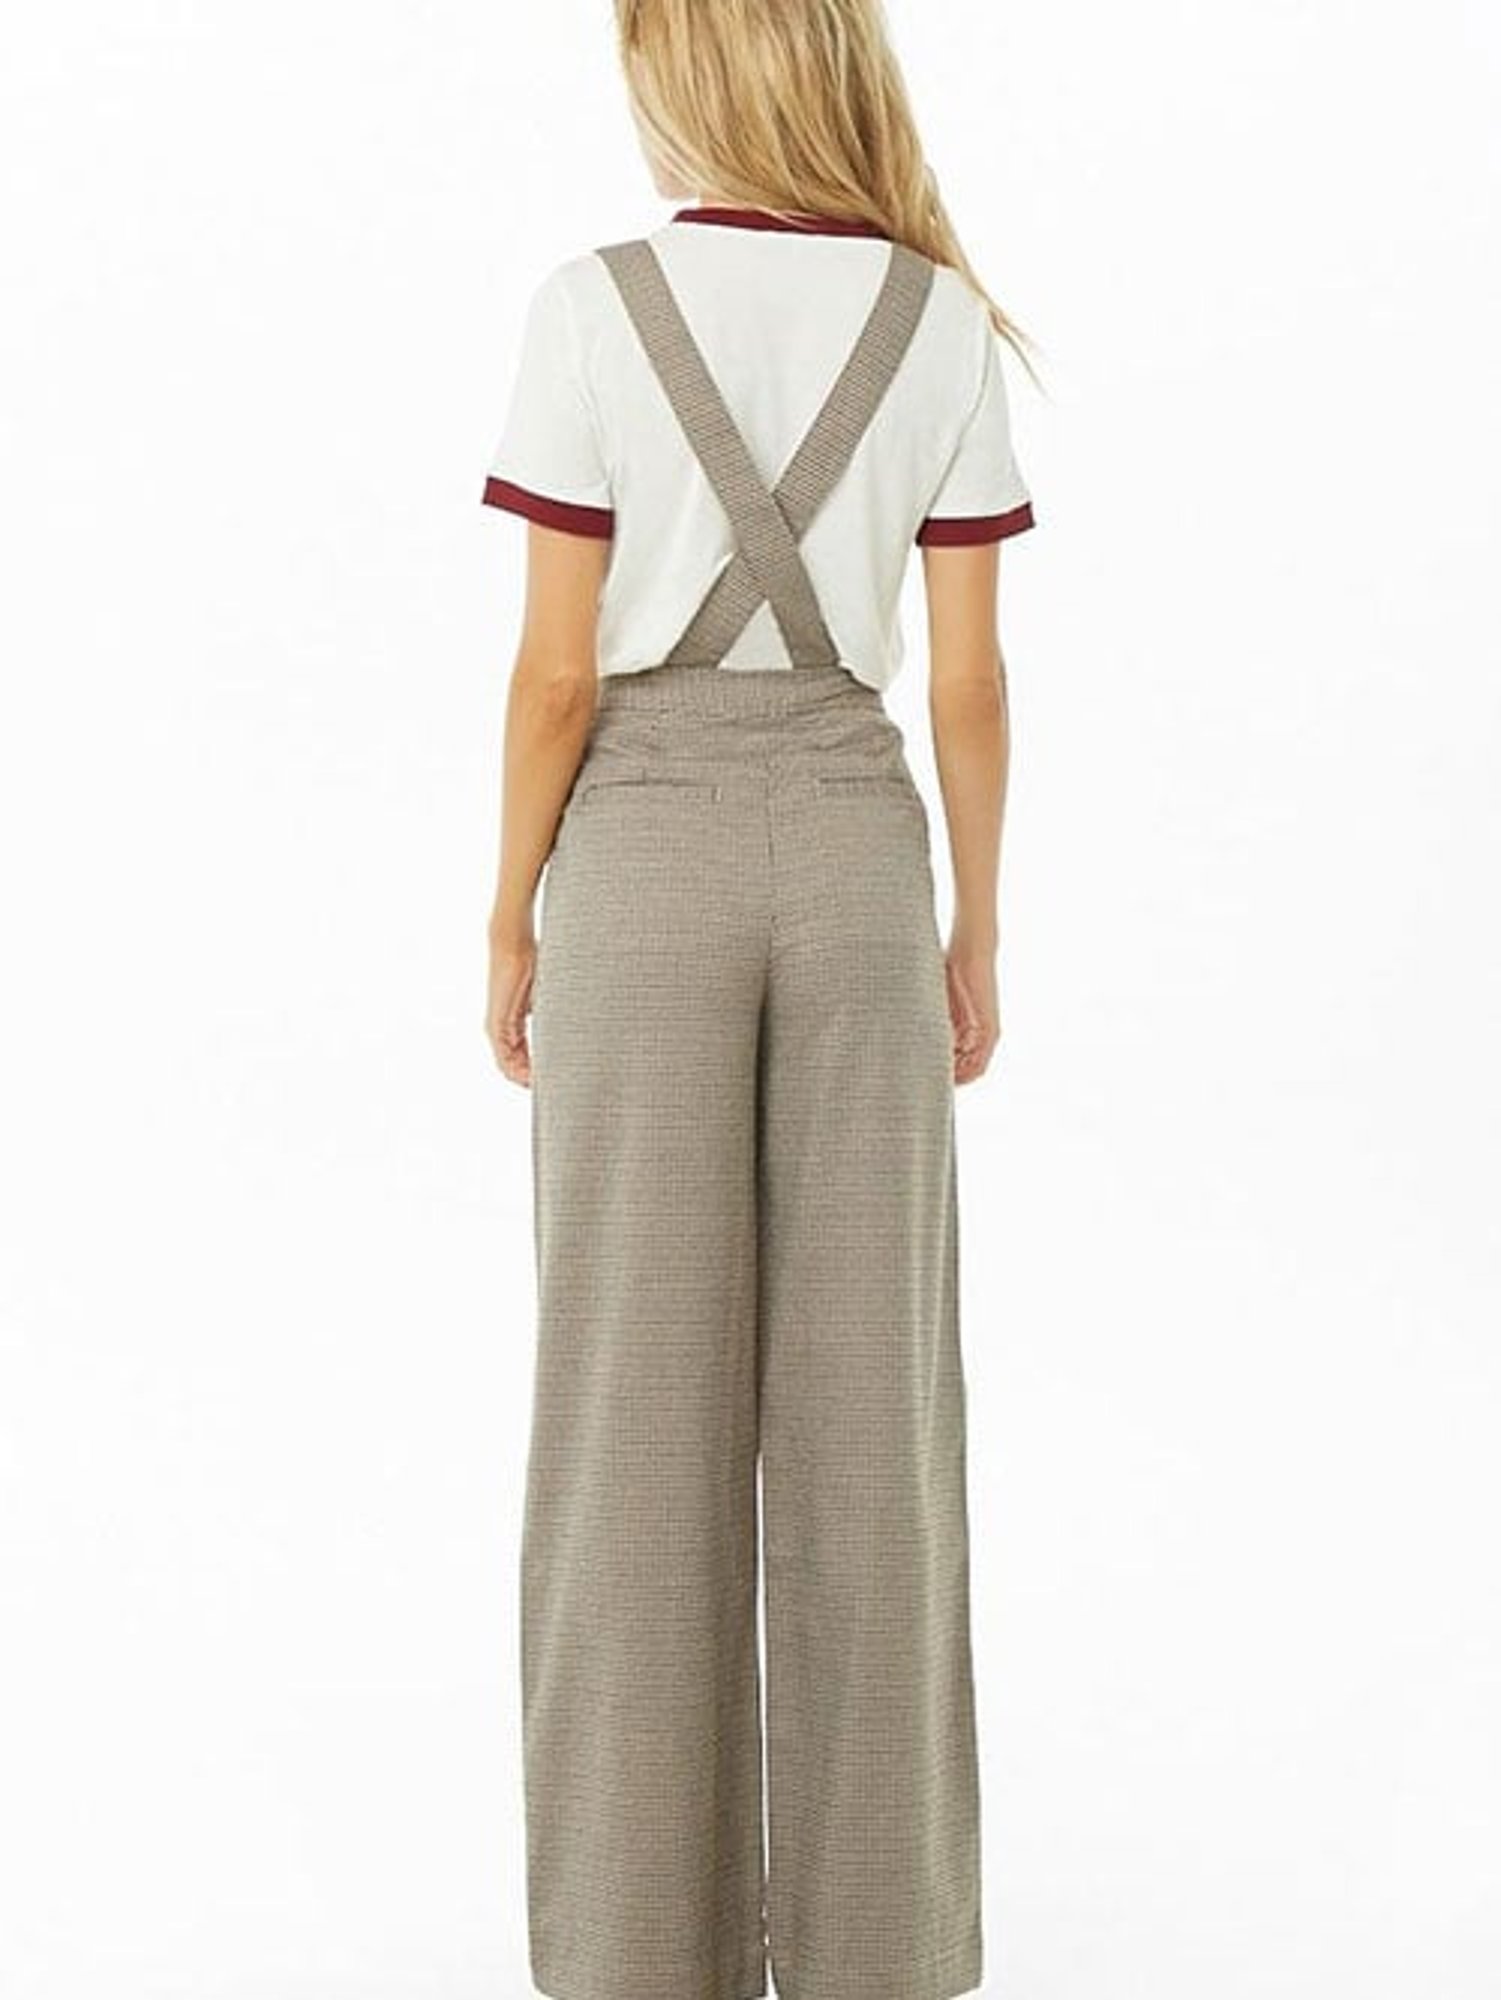 2PCS 1950s Blouse Top  Suspender Pants  Retro Stage  Chic Vintage  Dresses and Accessories